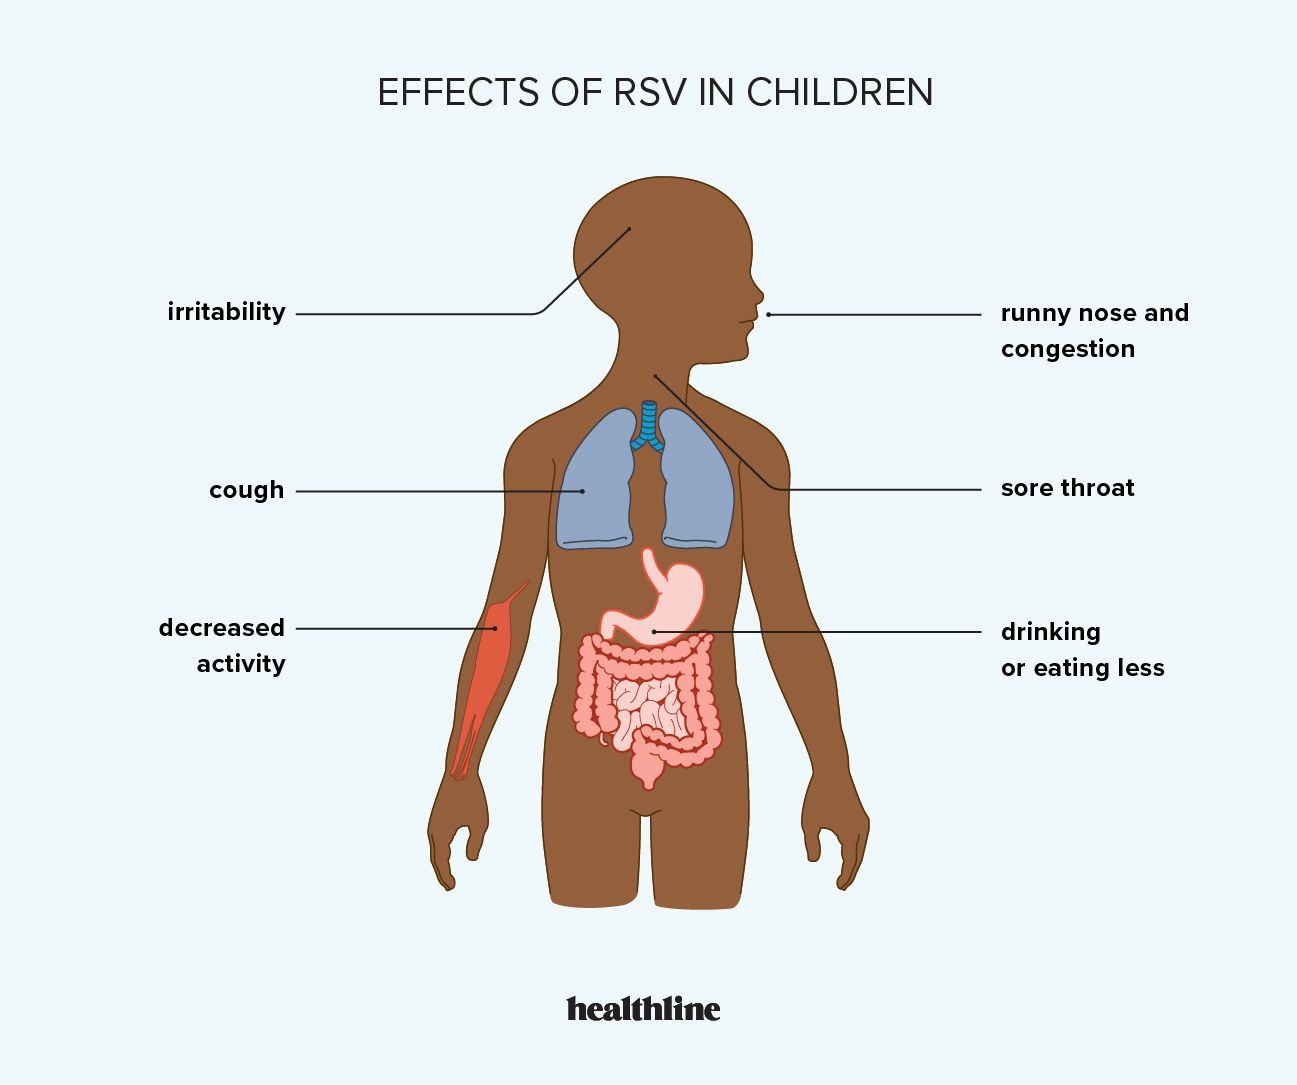 symptoms of RSV in children